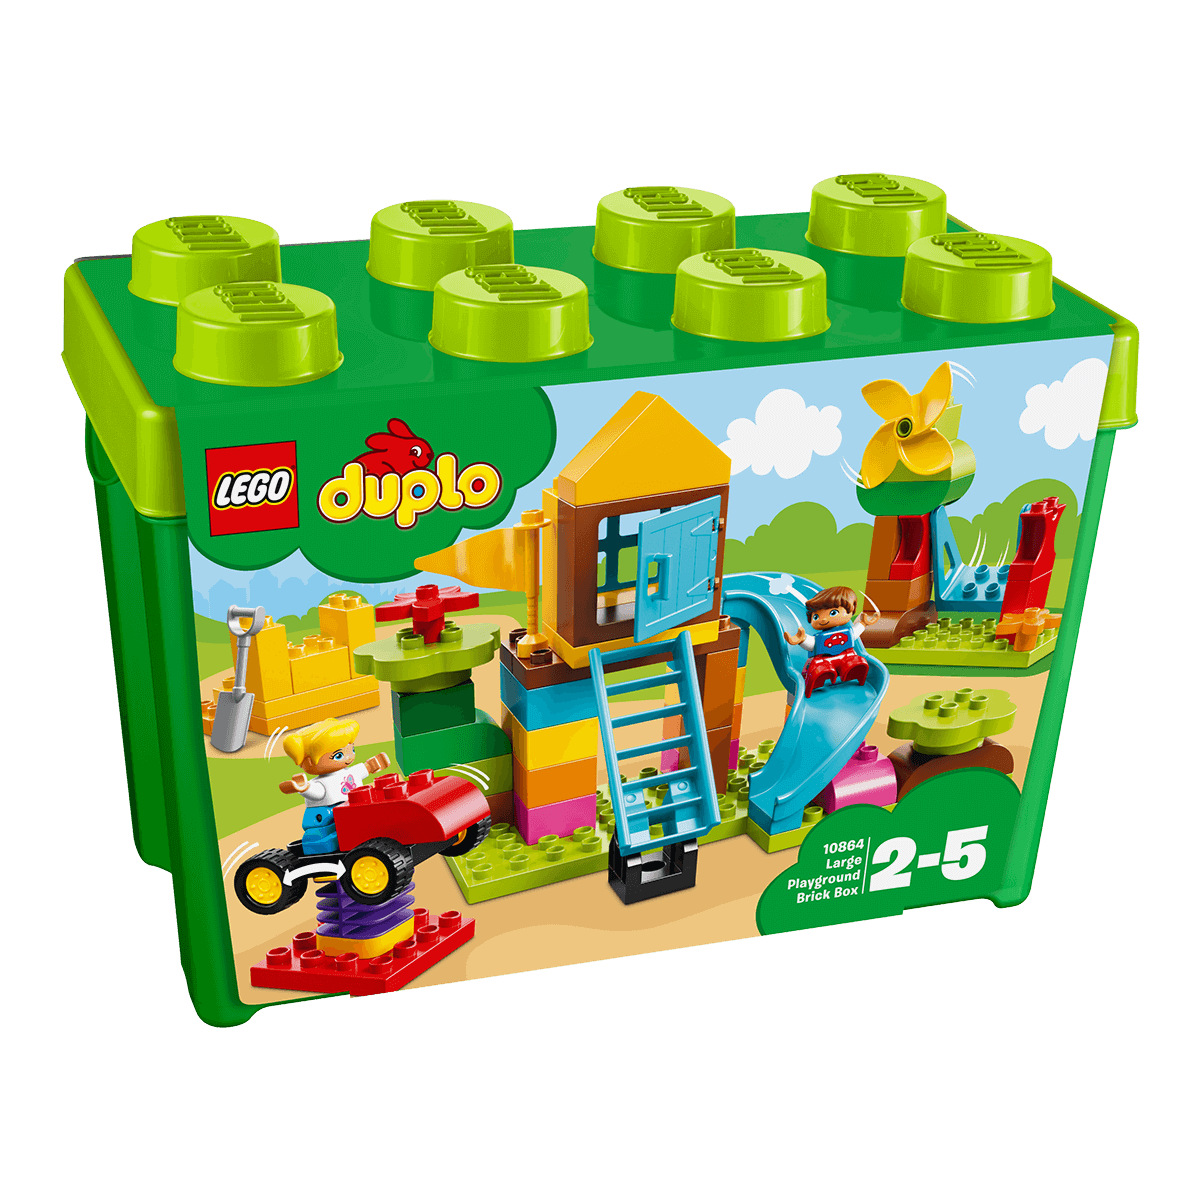 LEGO Duplo Large Playground Brick Box - 10864 | Early Learning Centre